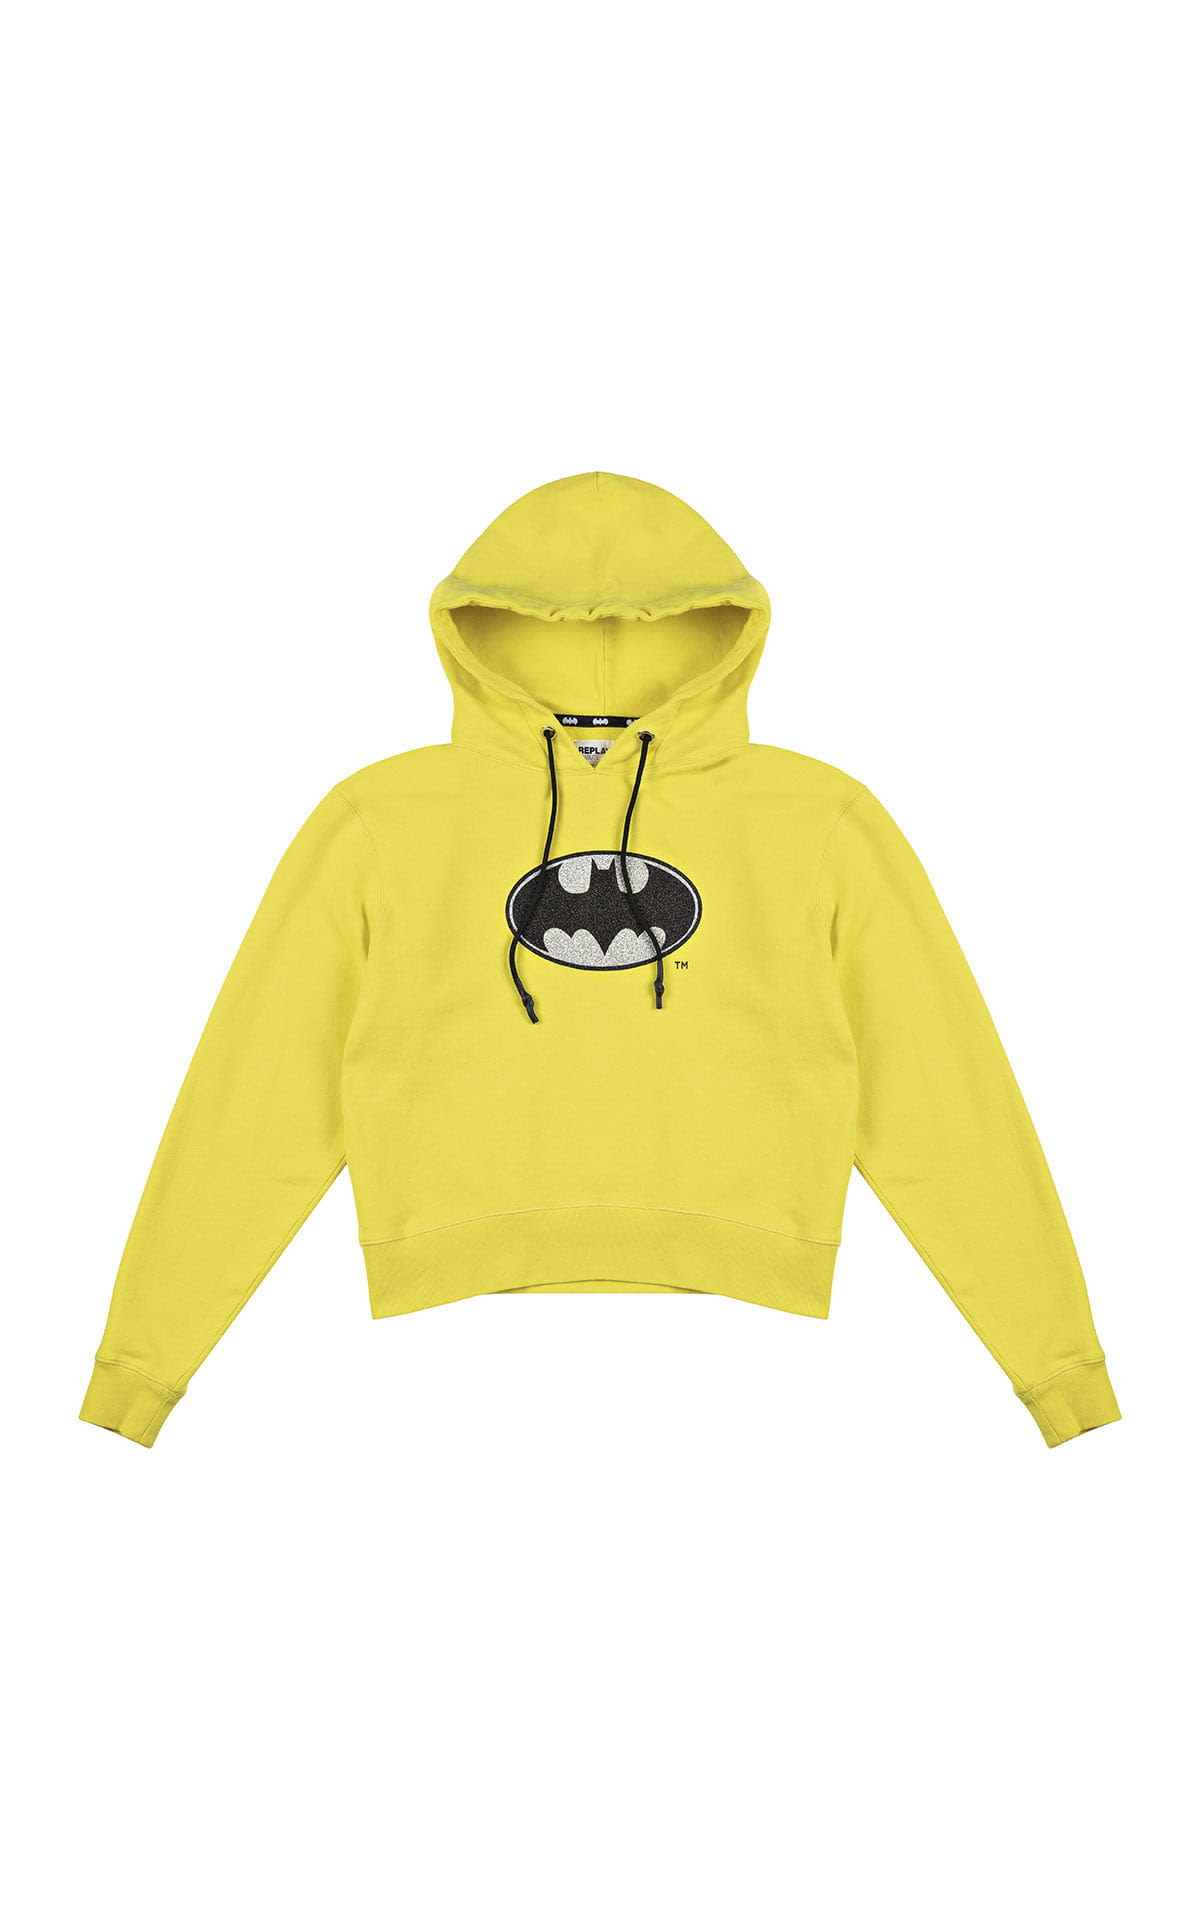 Yellow cropped batman sweatshirt